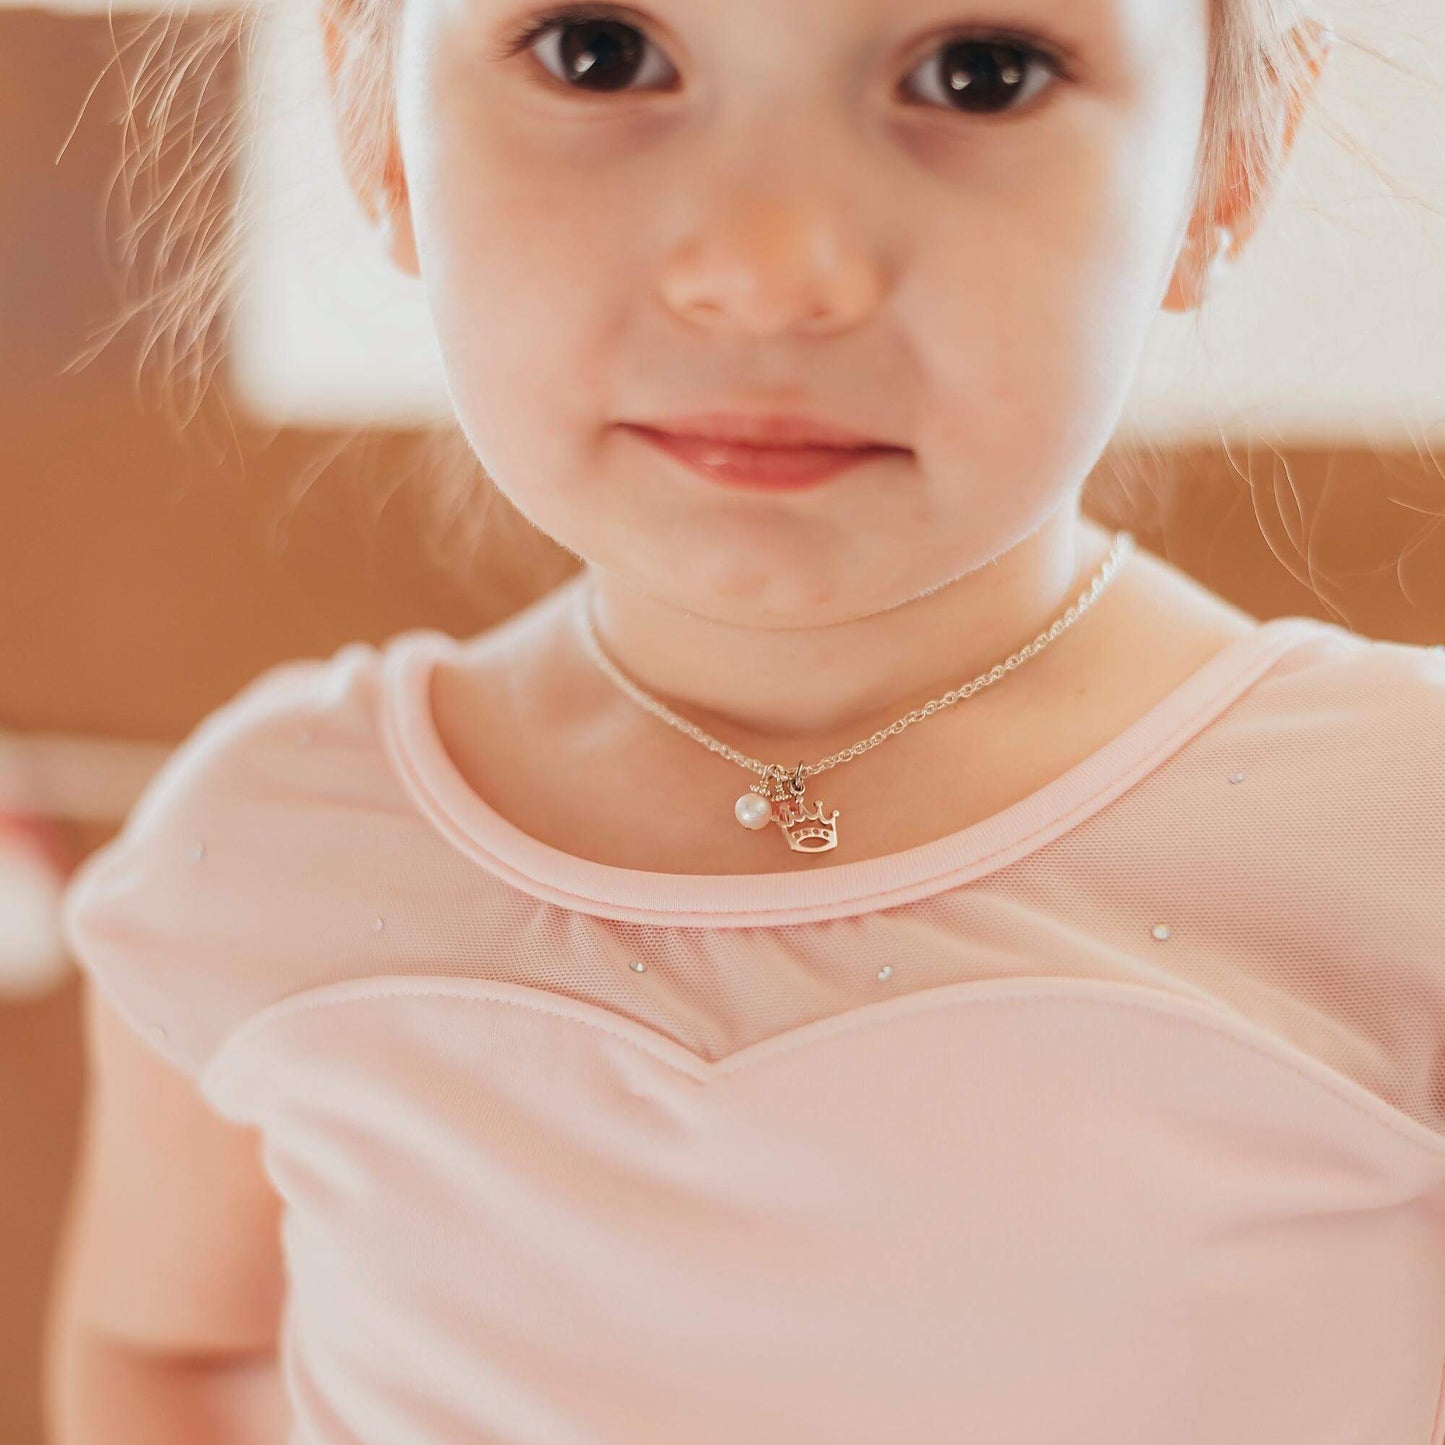 My Little Princess Necklace